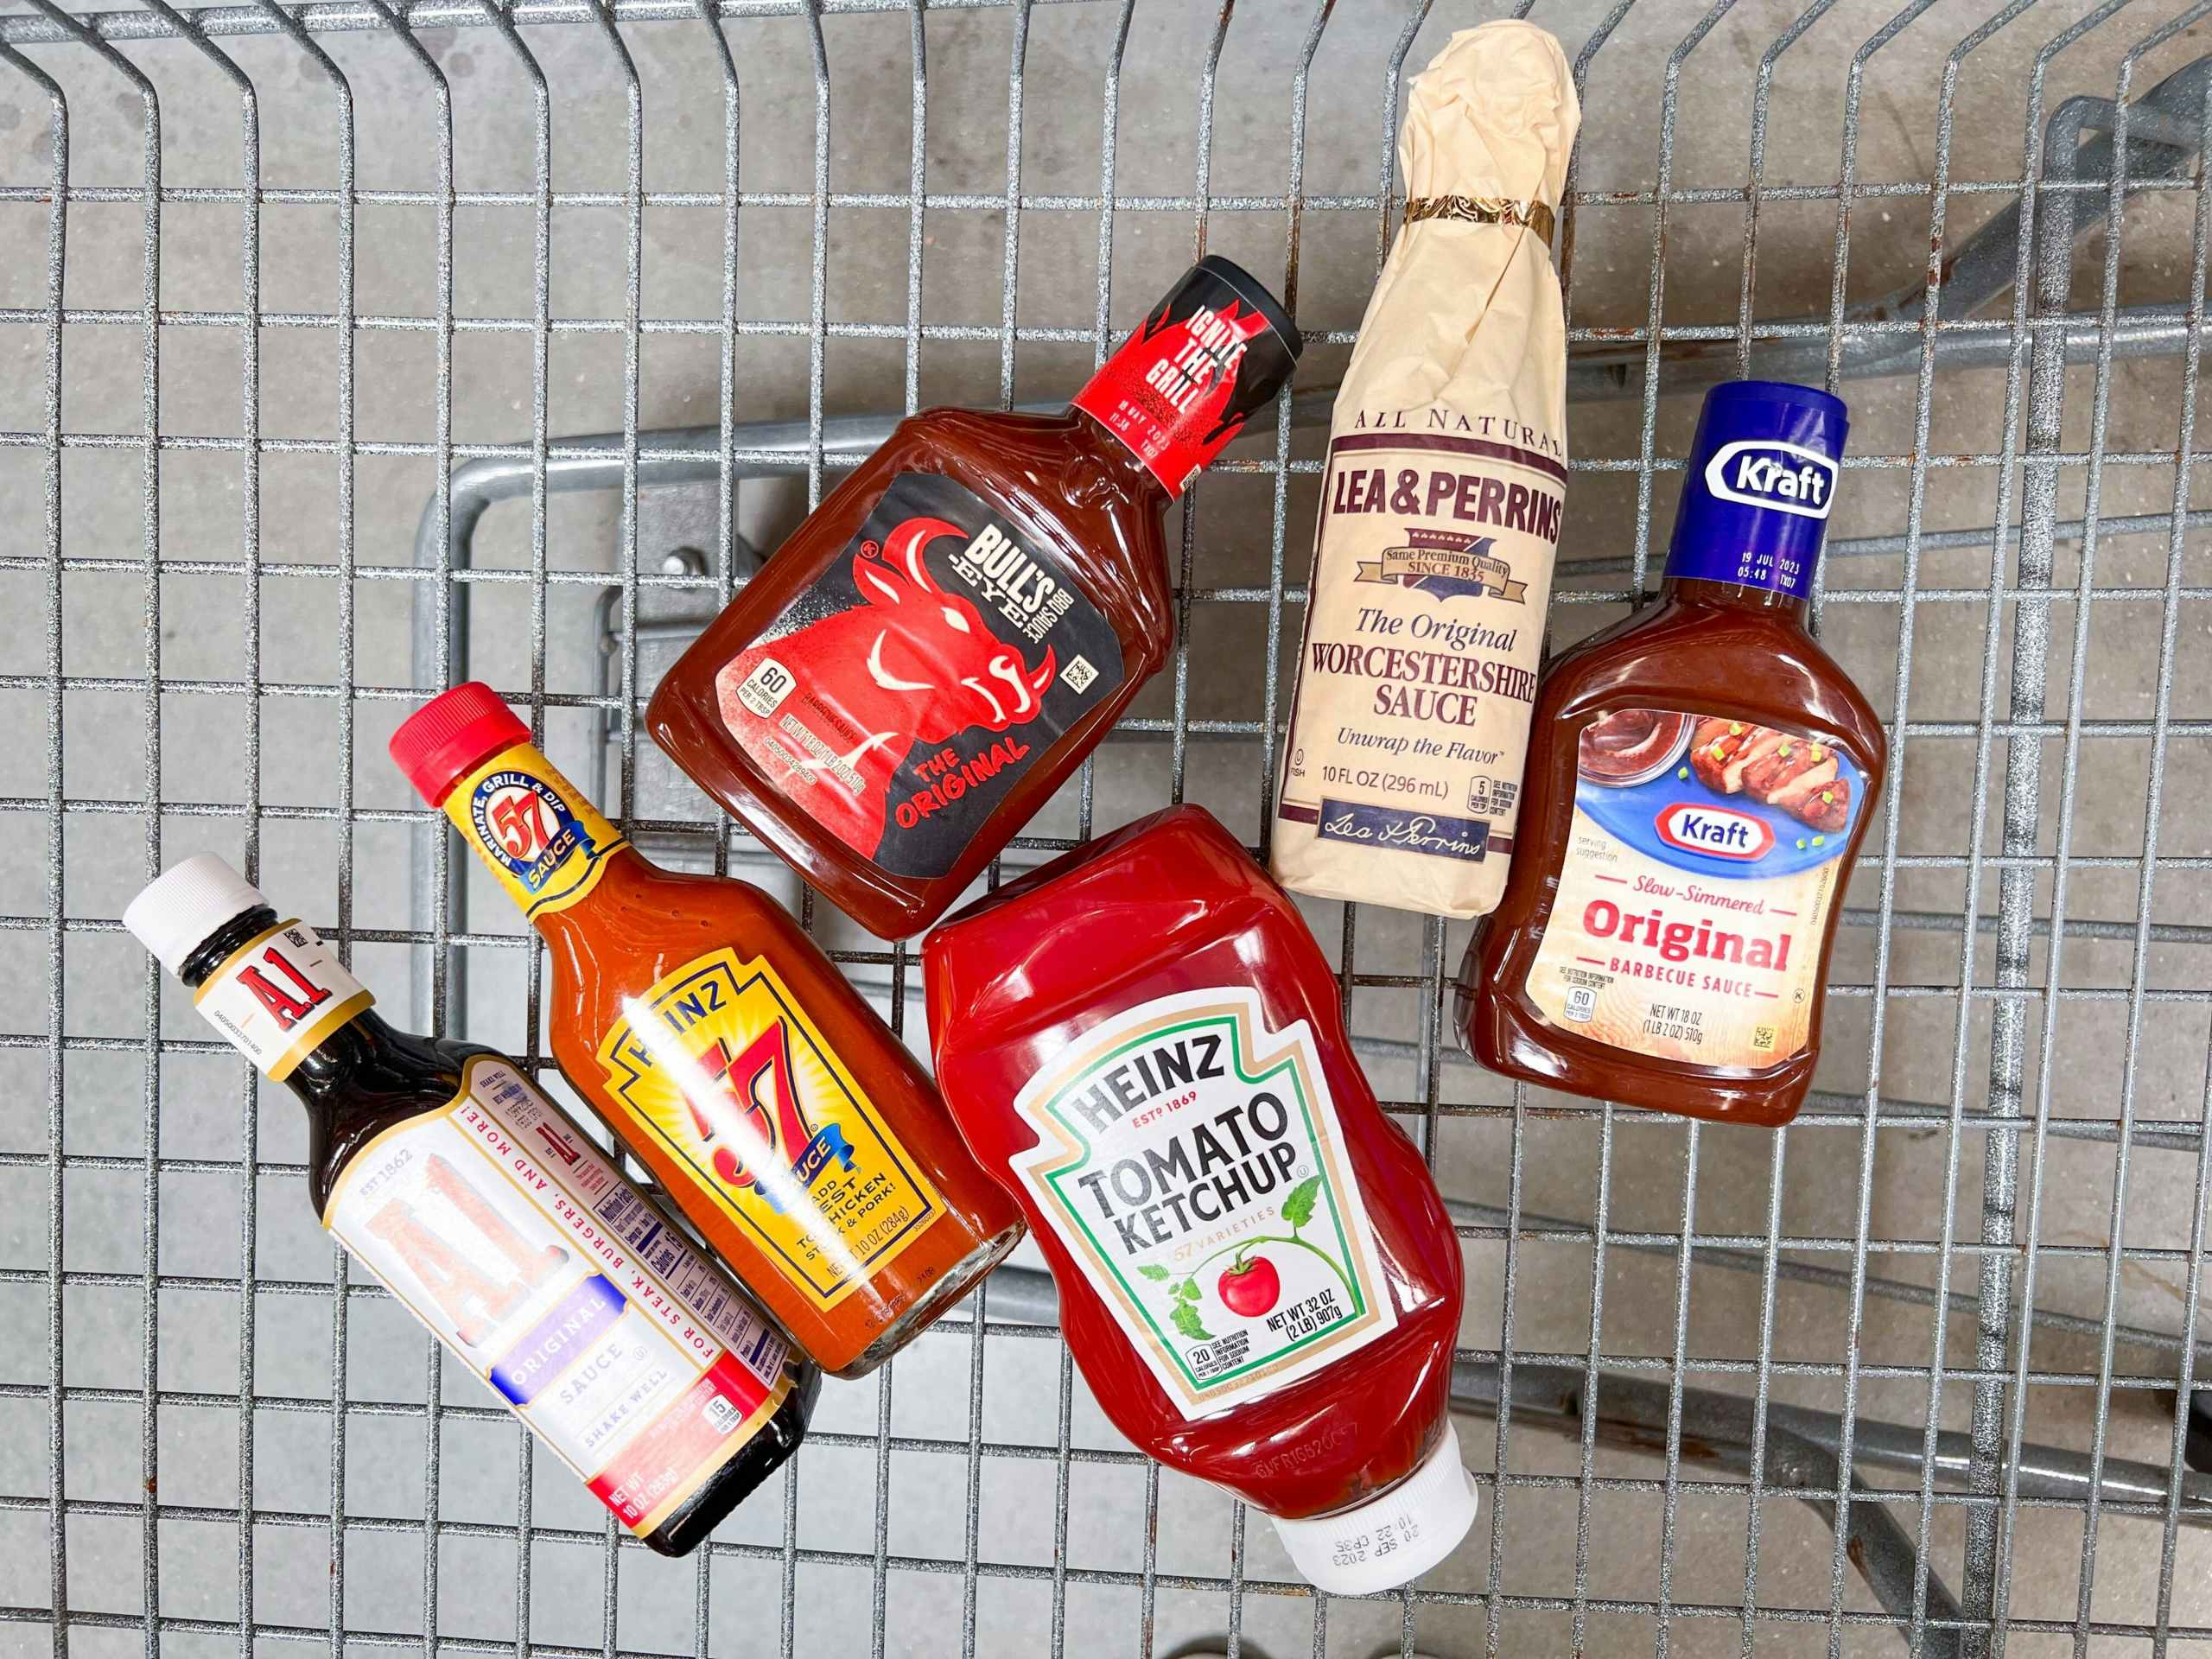 kraft sauces in Walmart shopping cart